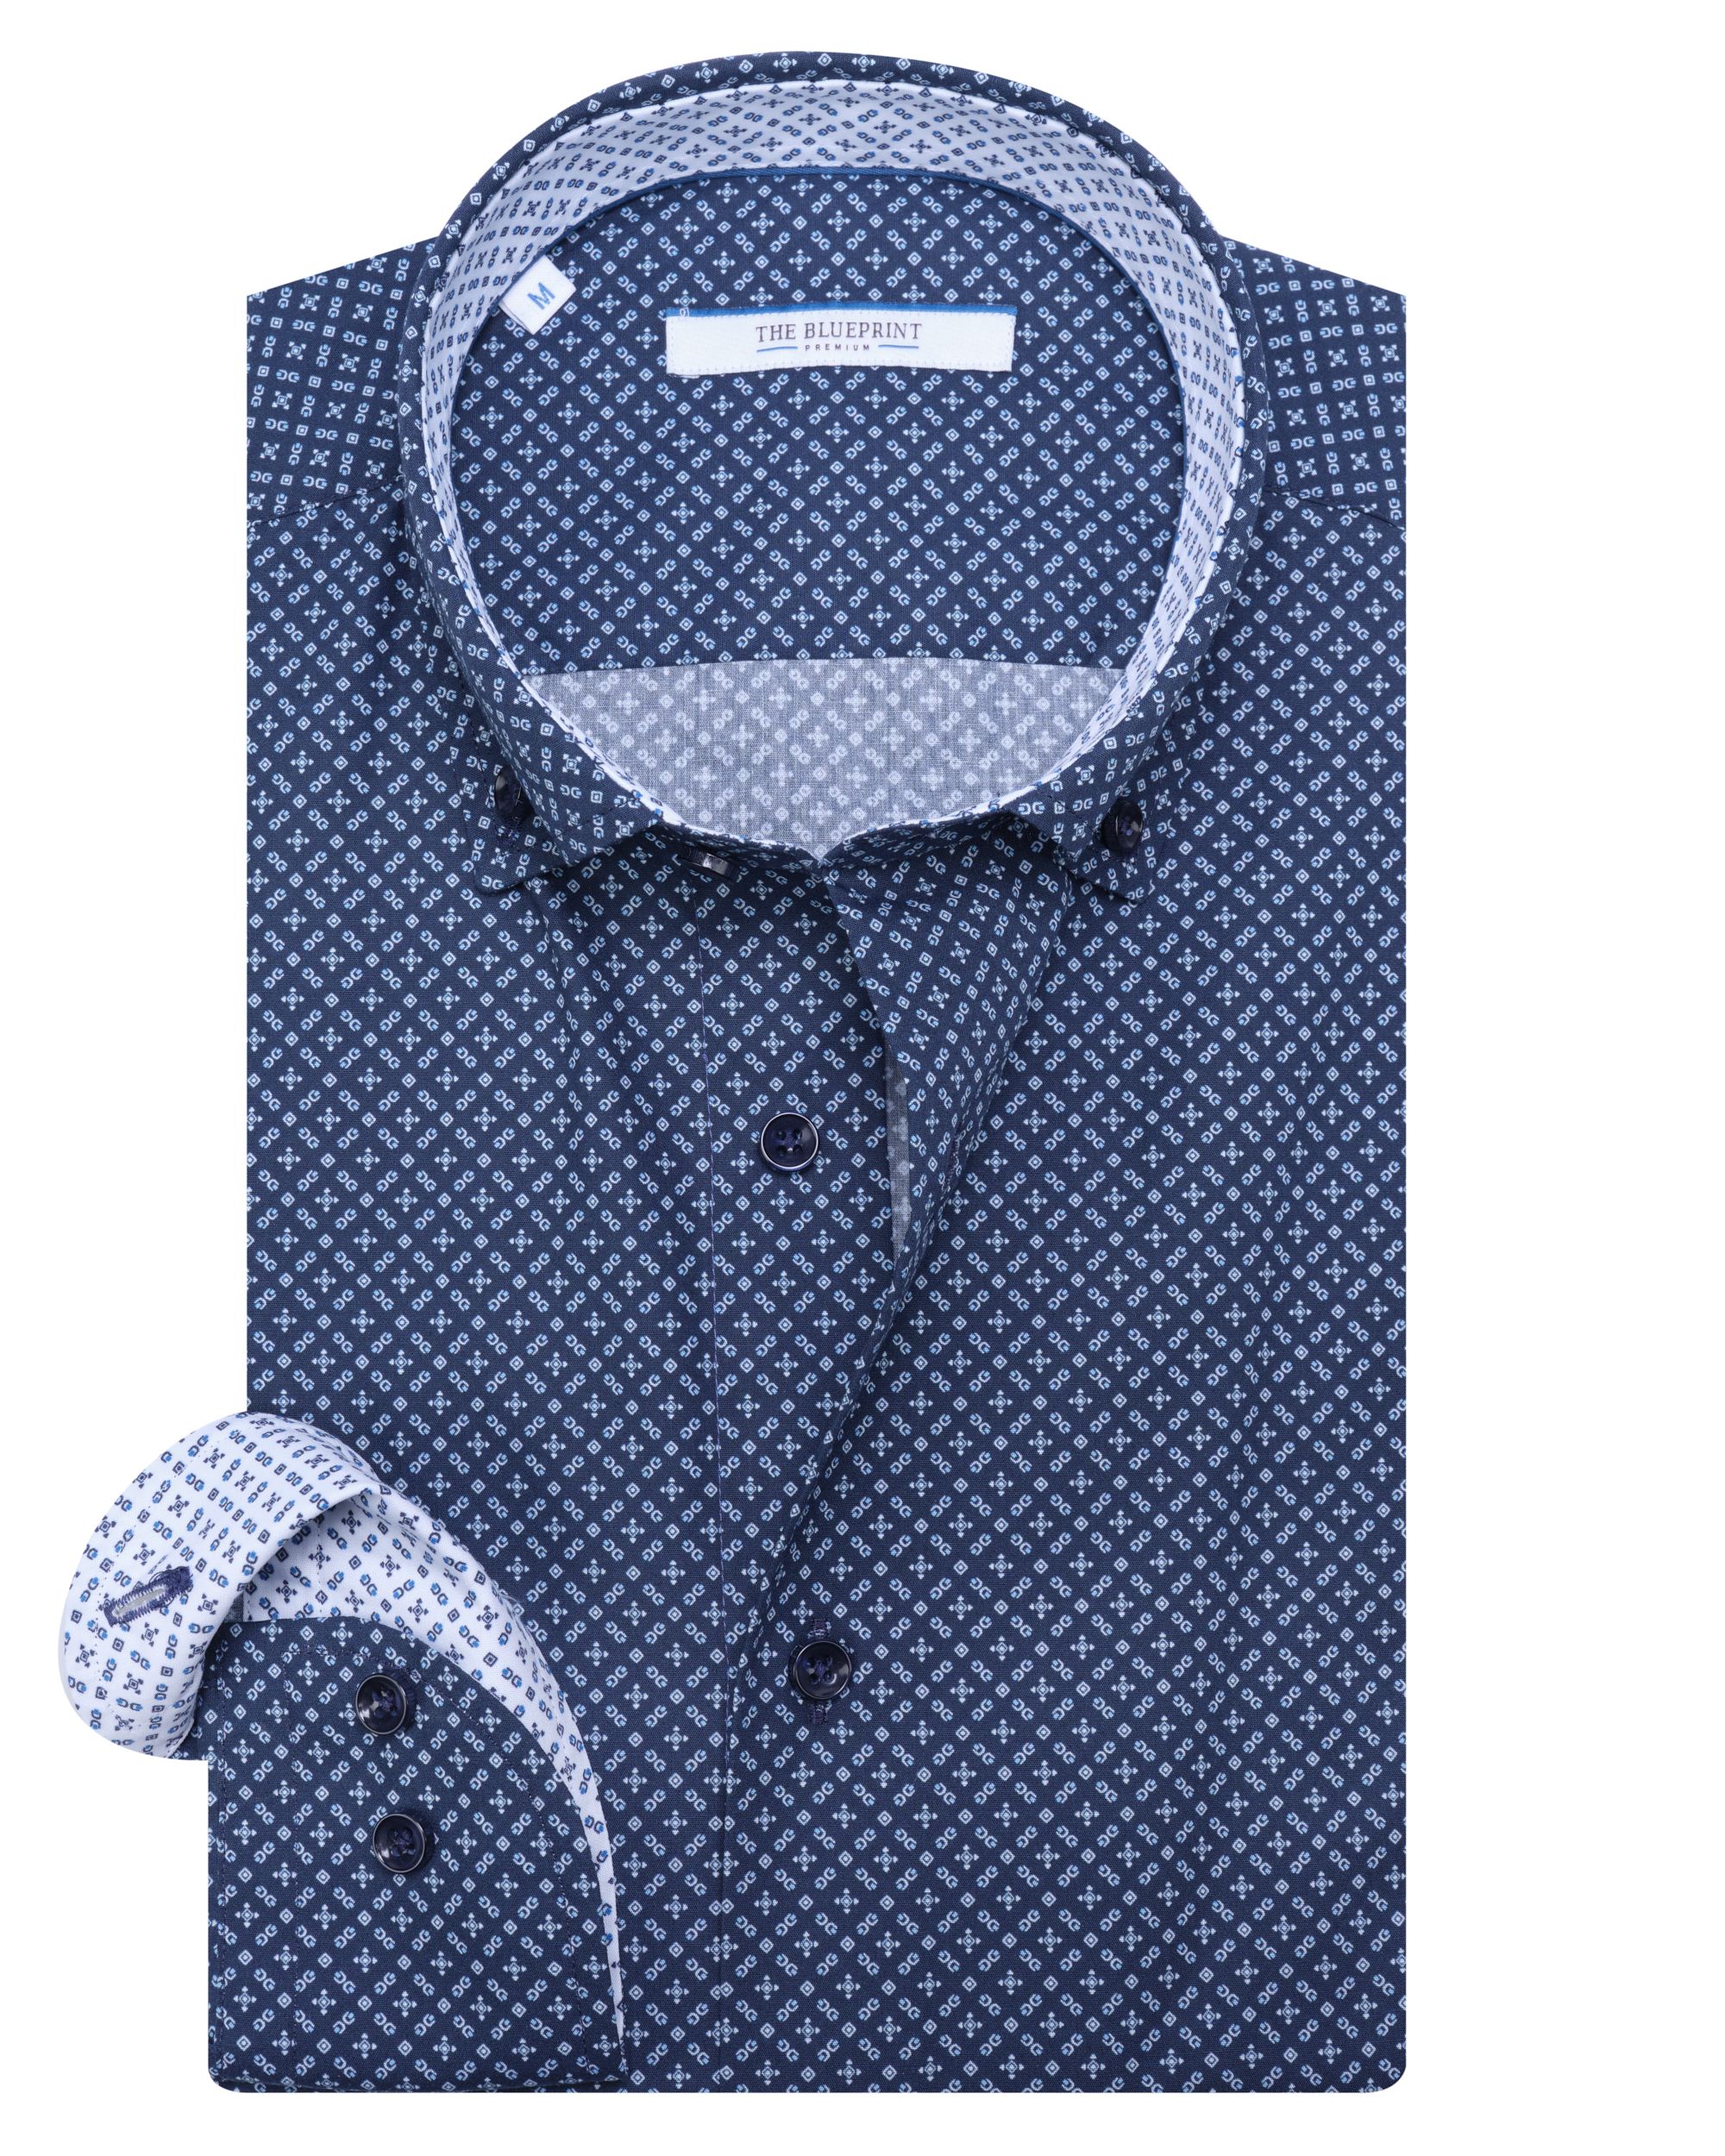 The BLUEPRINT Premium Casual Overhemd LM Navy dessin 082237-001-L